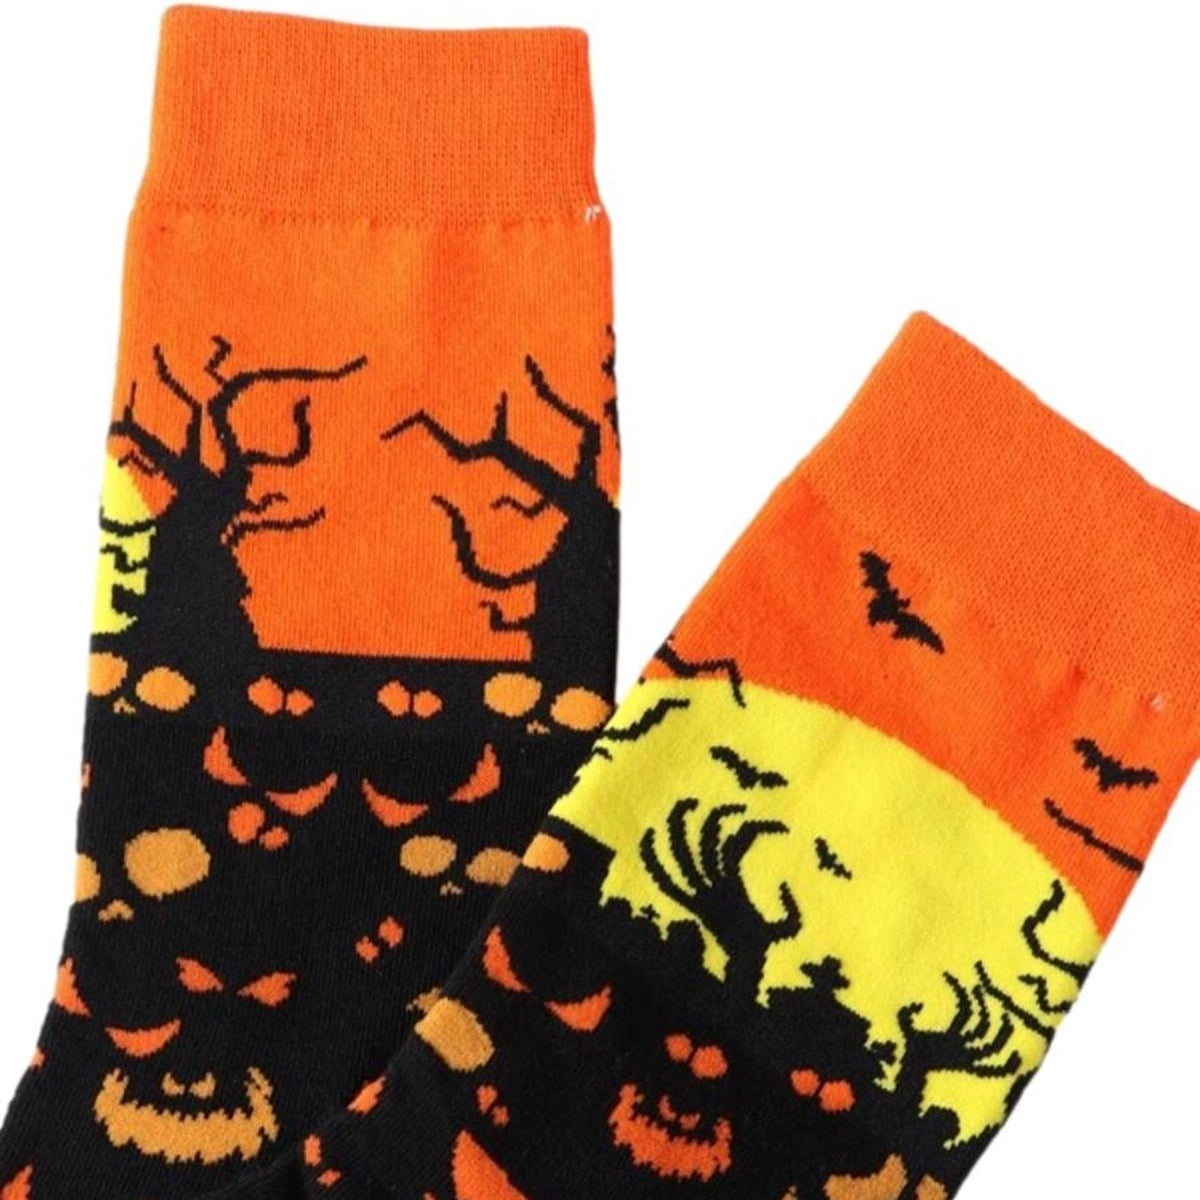 Ro Rox Halloween Spooky Gothic Crew Ankle Socks